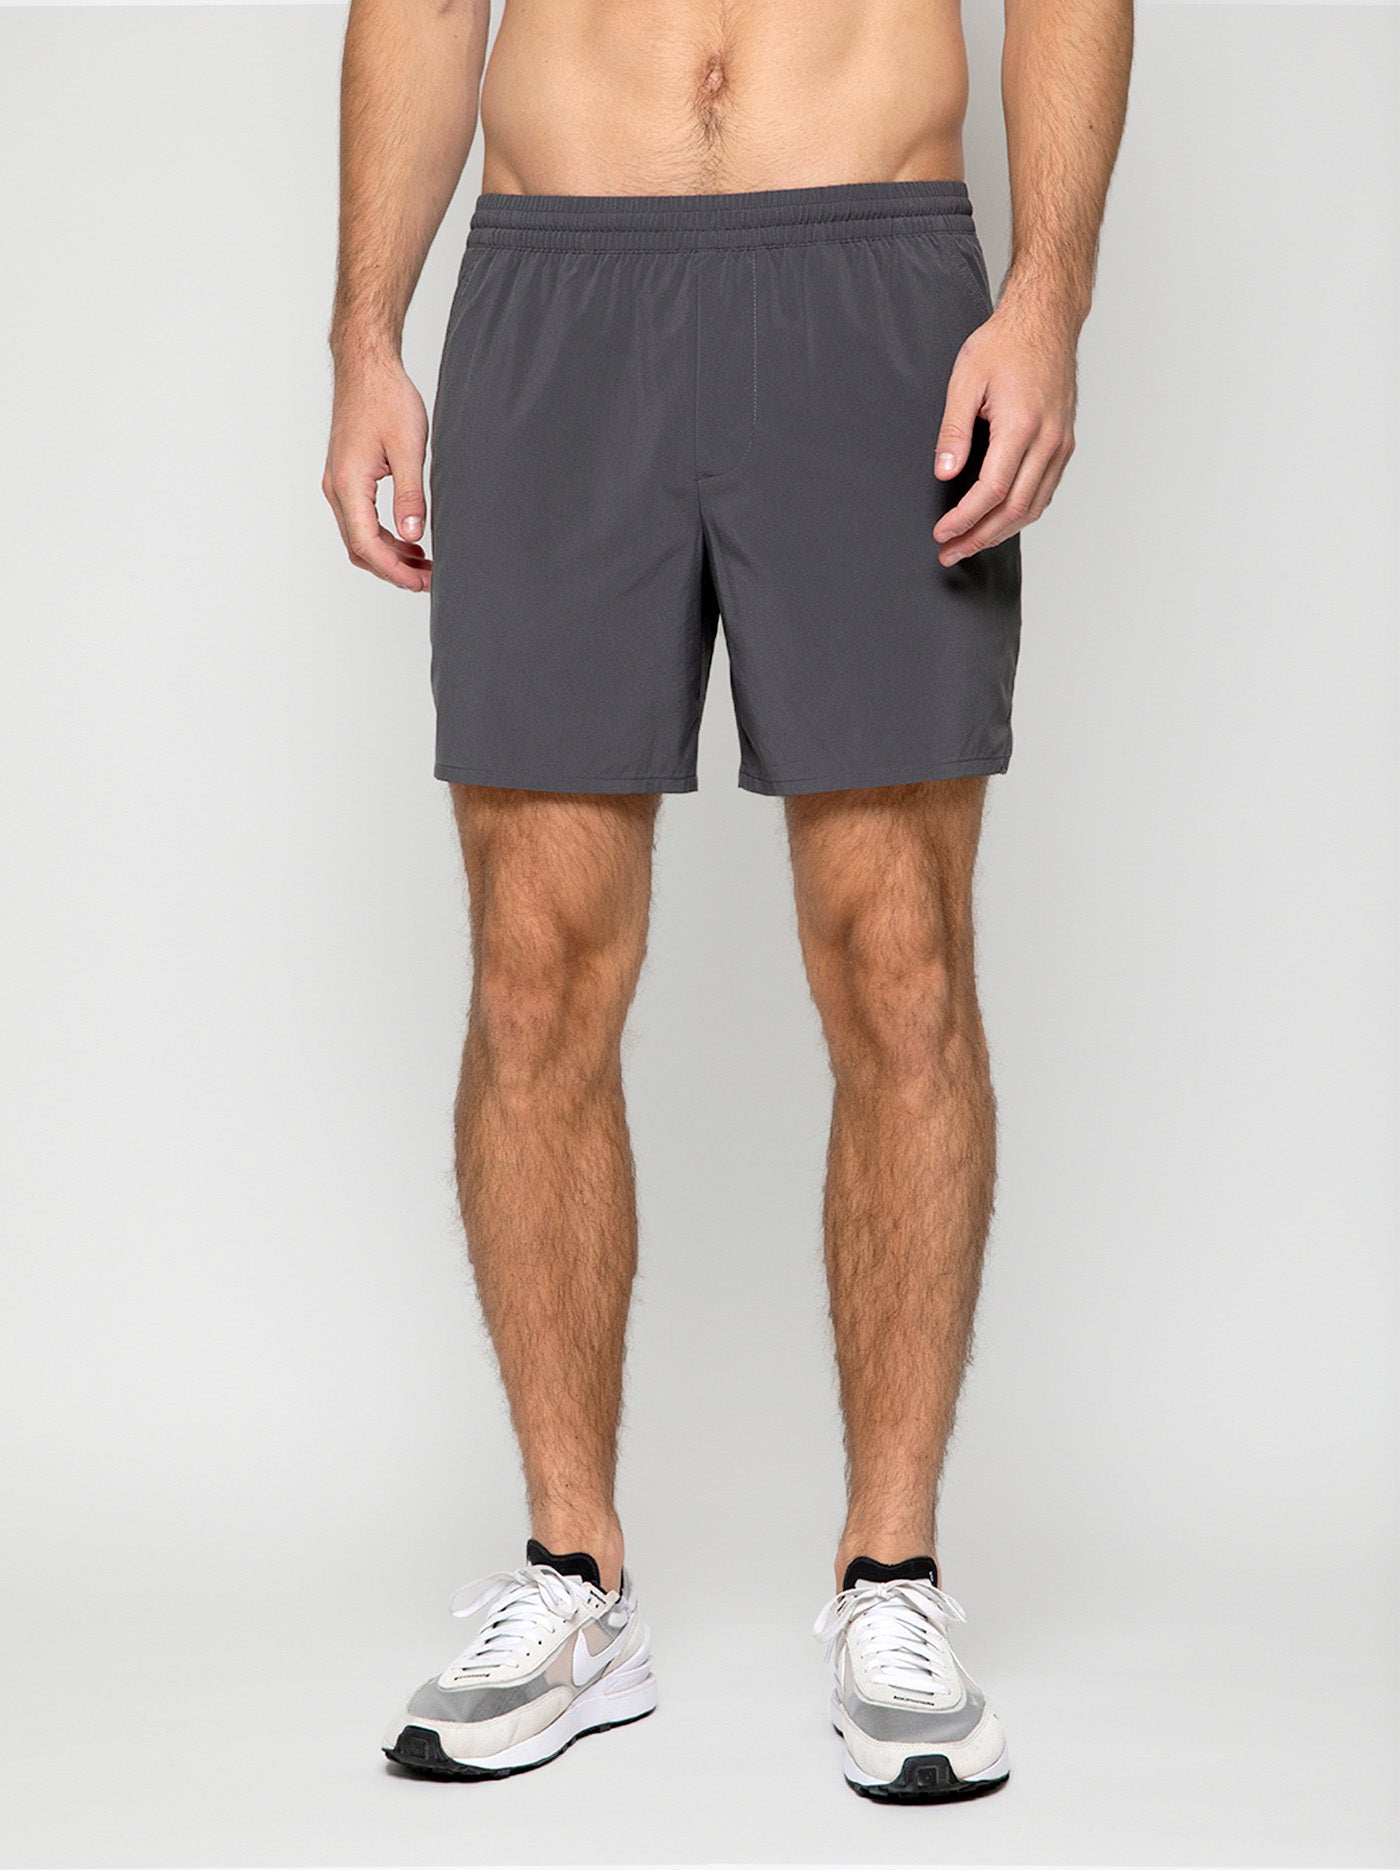 Inseam inch Endure Men\'s - Fourlaps 6 Shorts Short: